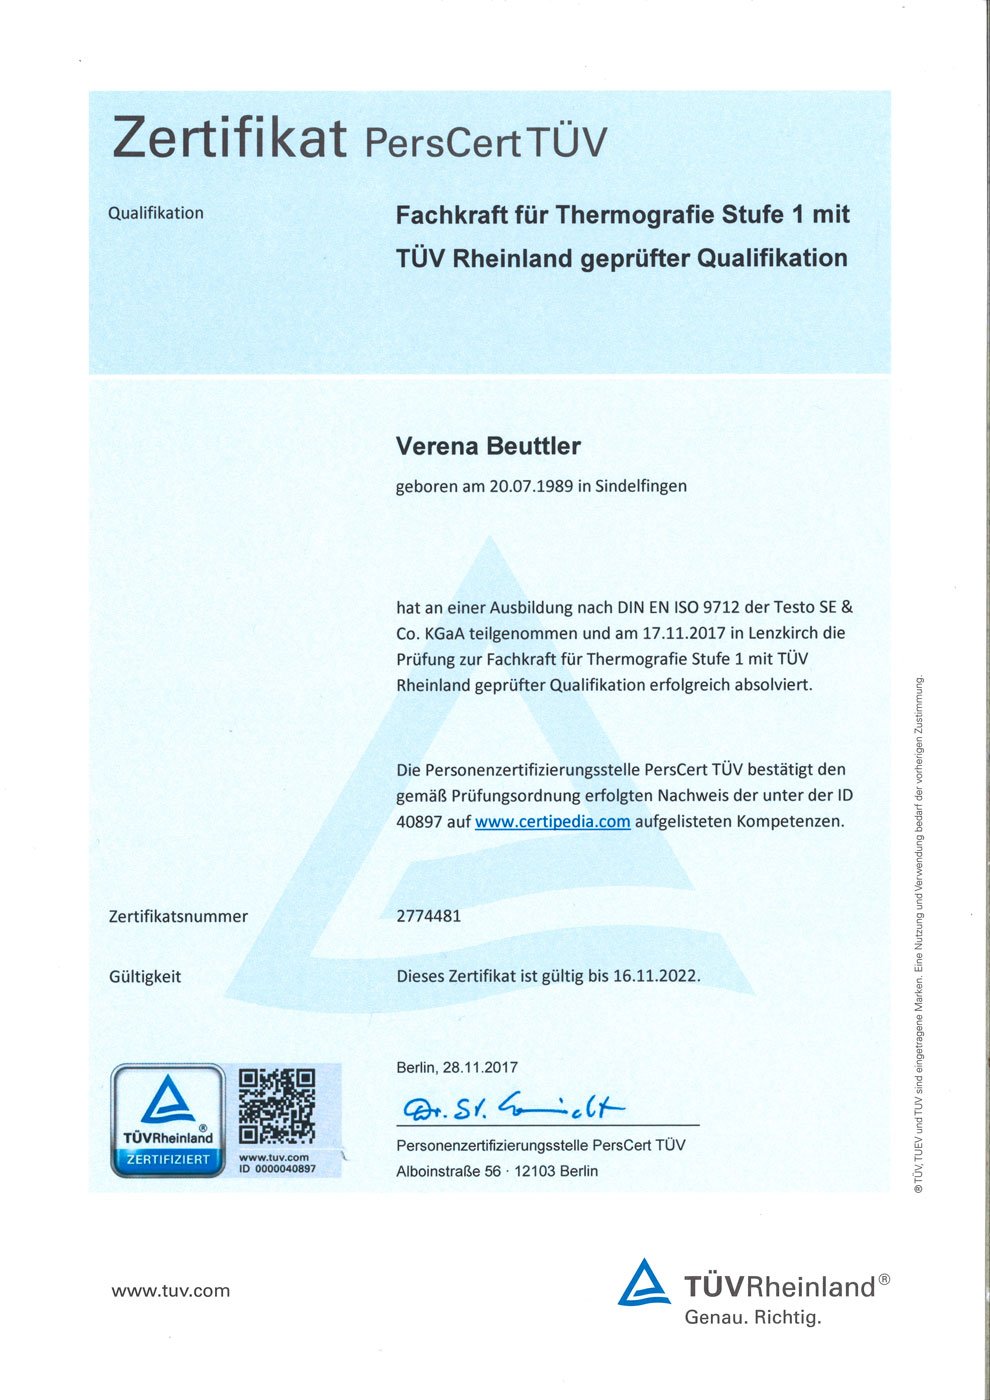 Zertifikat PersCert TÜV Fachkraft für Thermografie Stufe 1